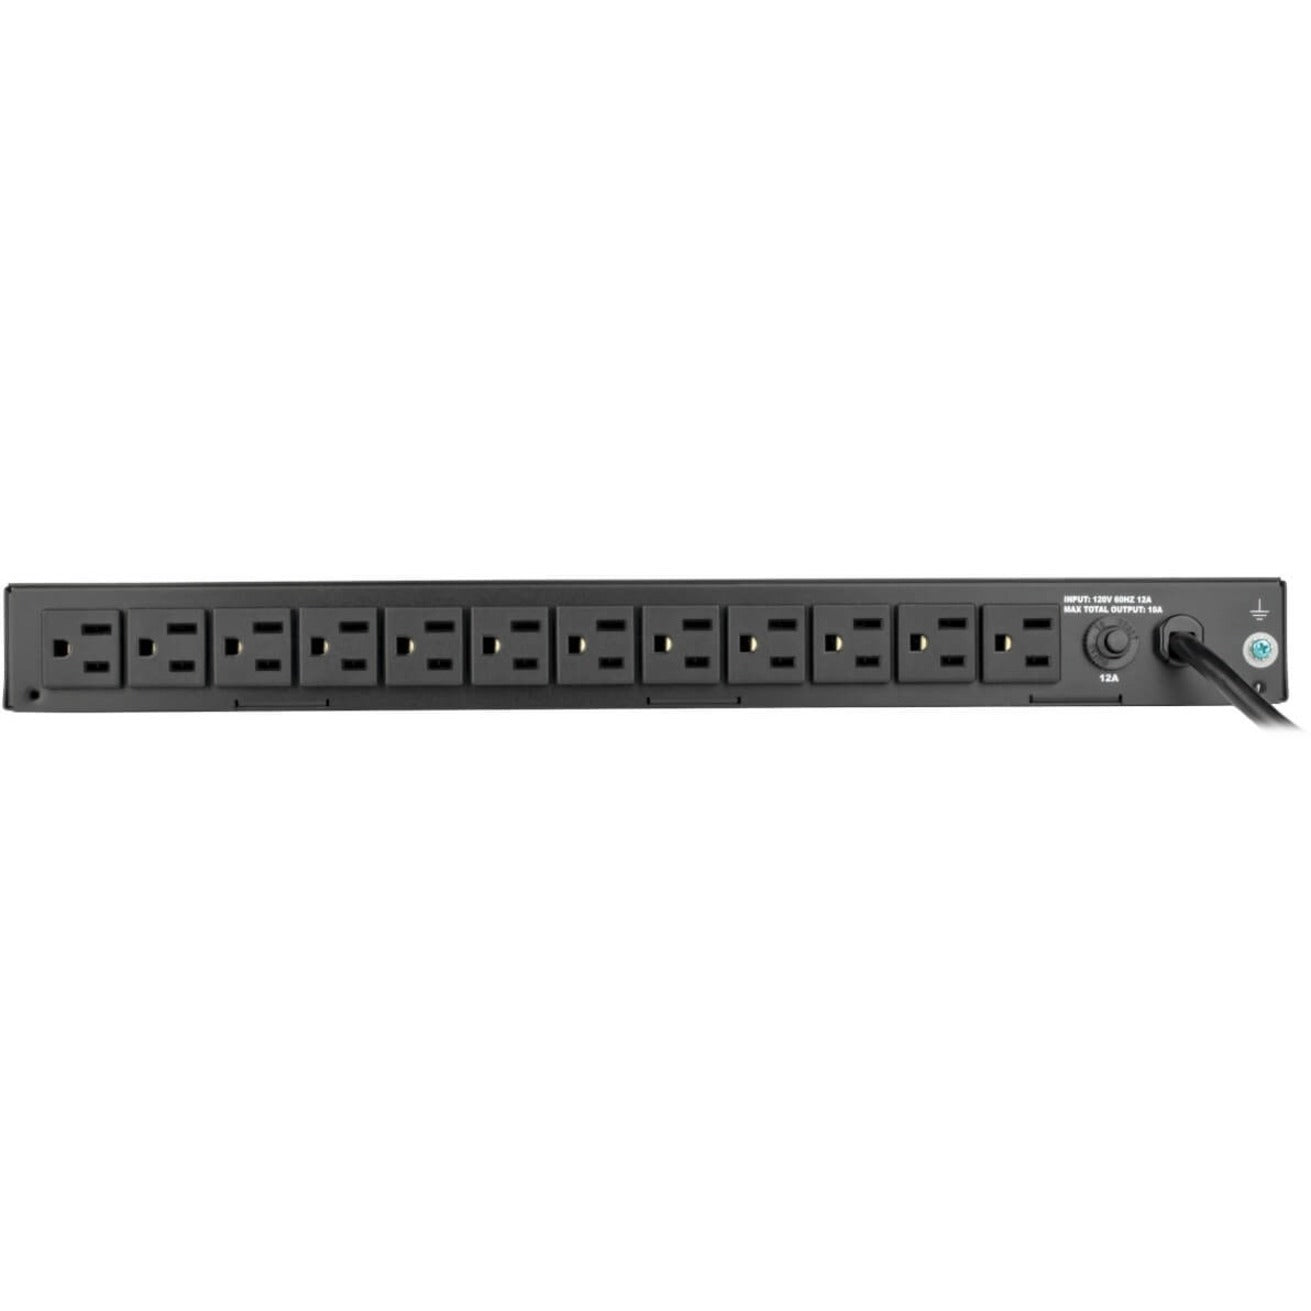 Tripp Lite NSS-G24D2P24 Ethernet Switch, 24 Port Gigabit L2 Managed PoE+ Switch